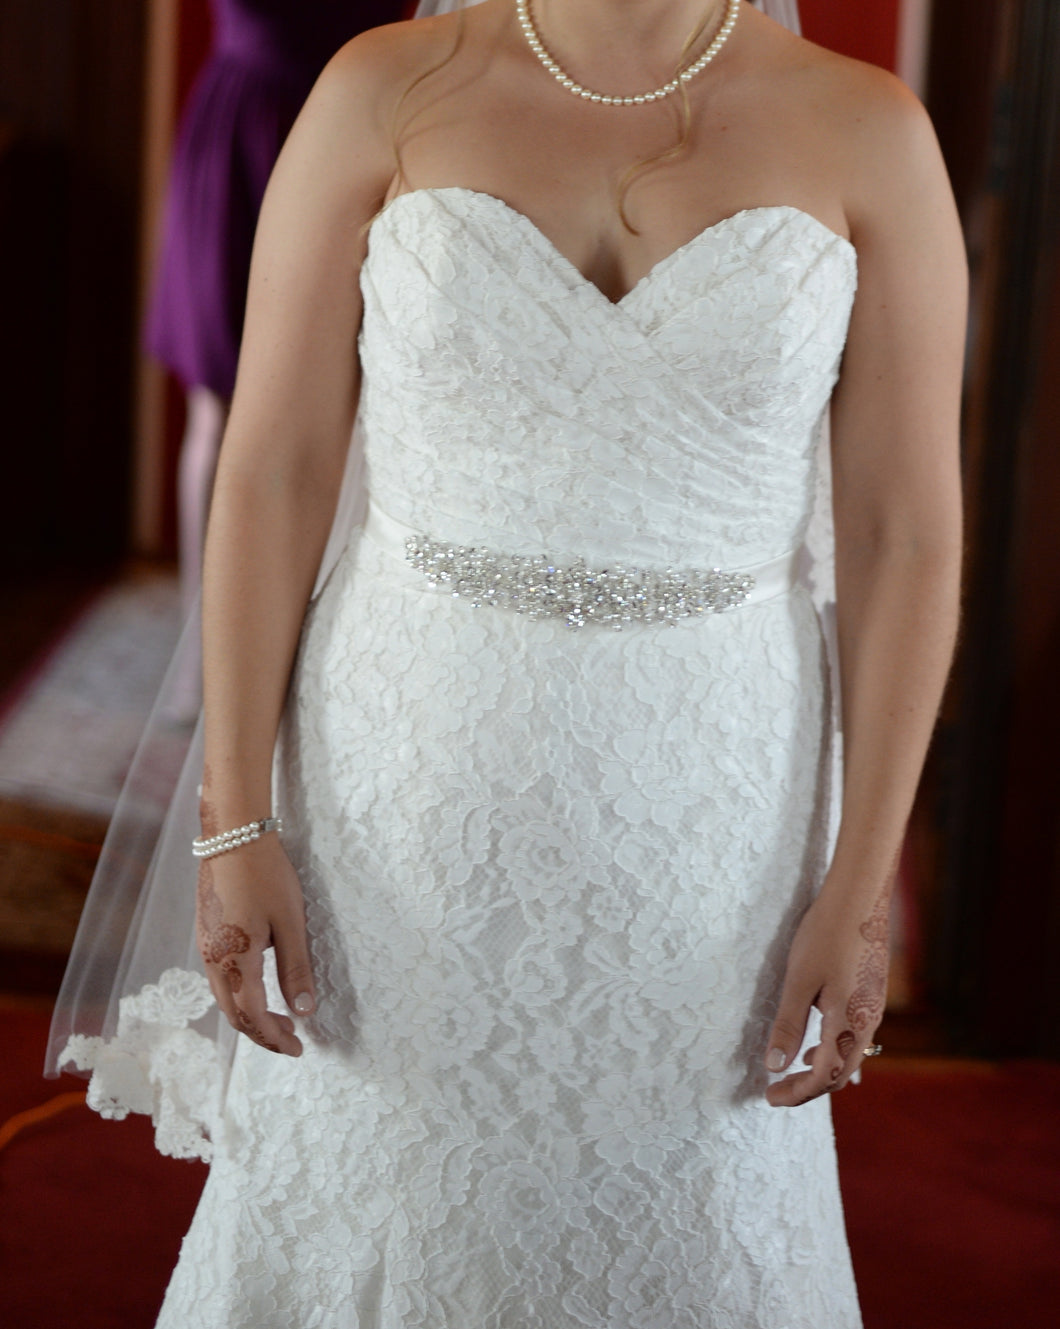 Mori Lee 'Madeline Gardner 5102' size 12 used wedding dress front view on bride